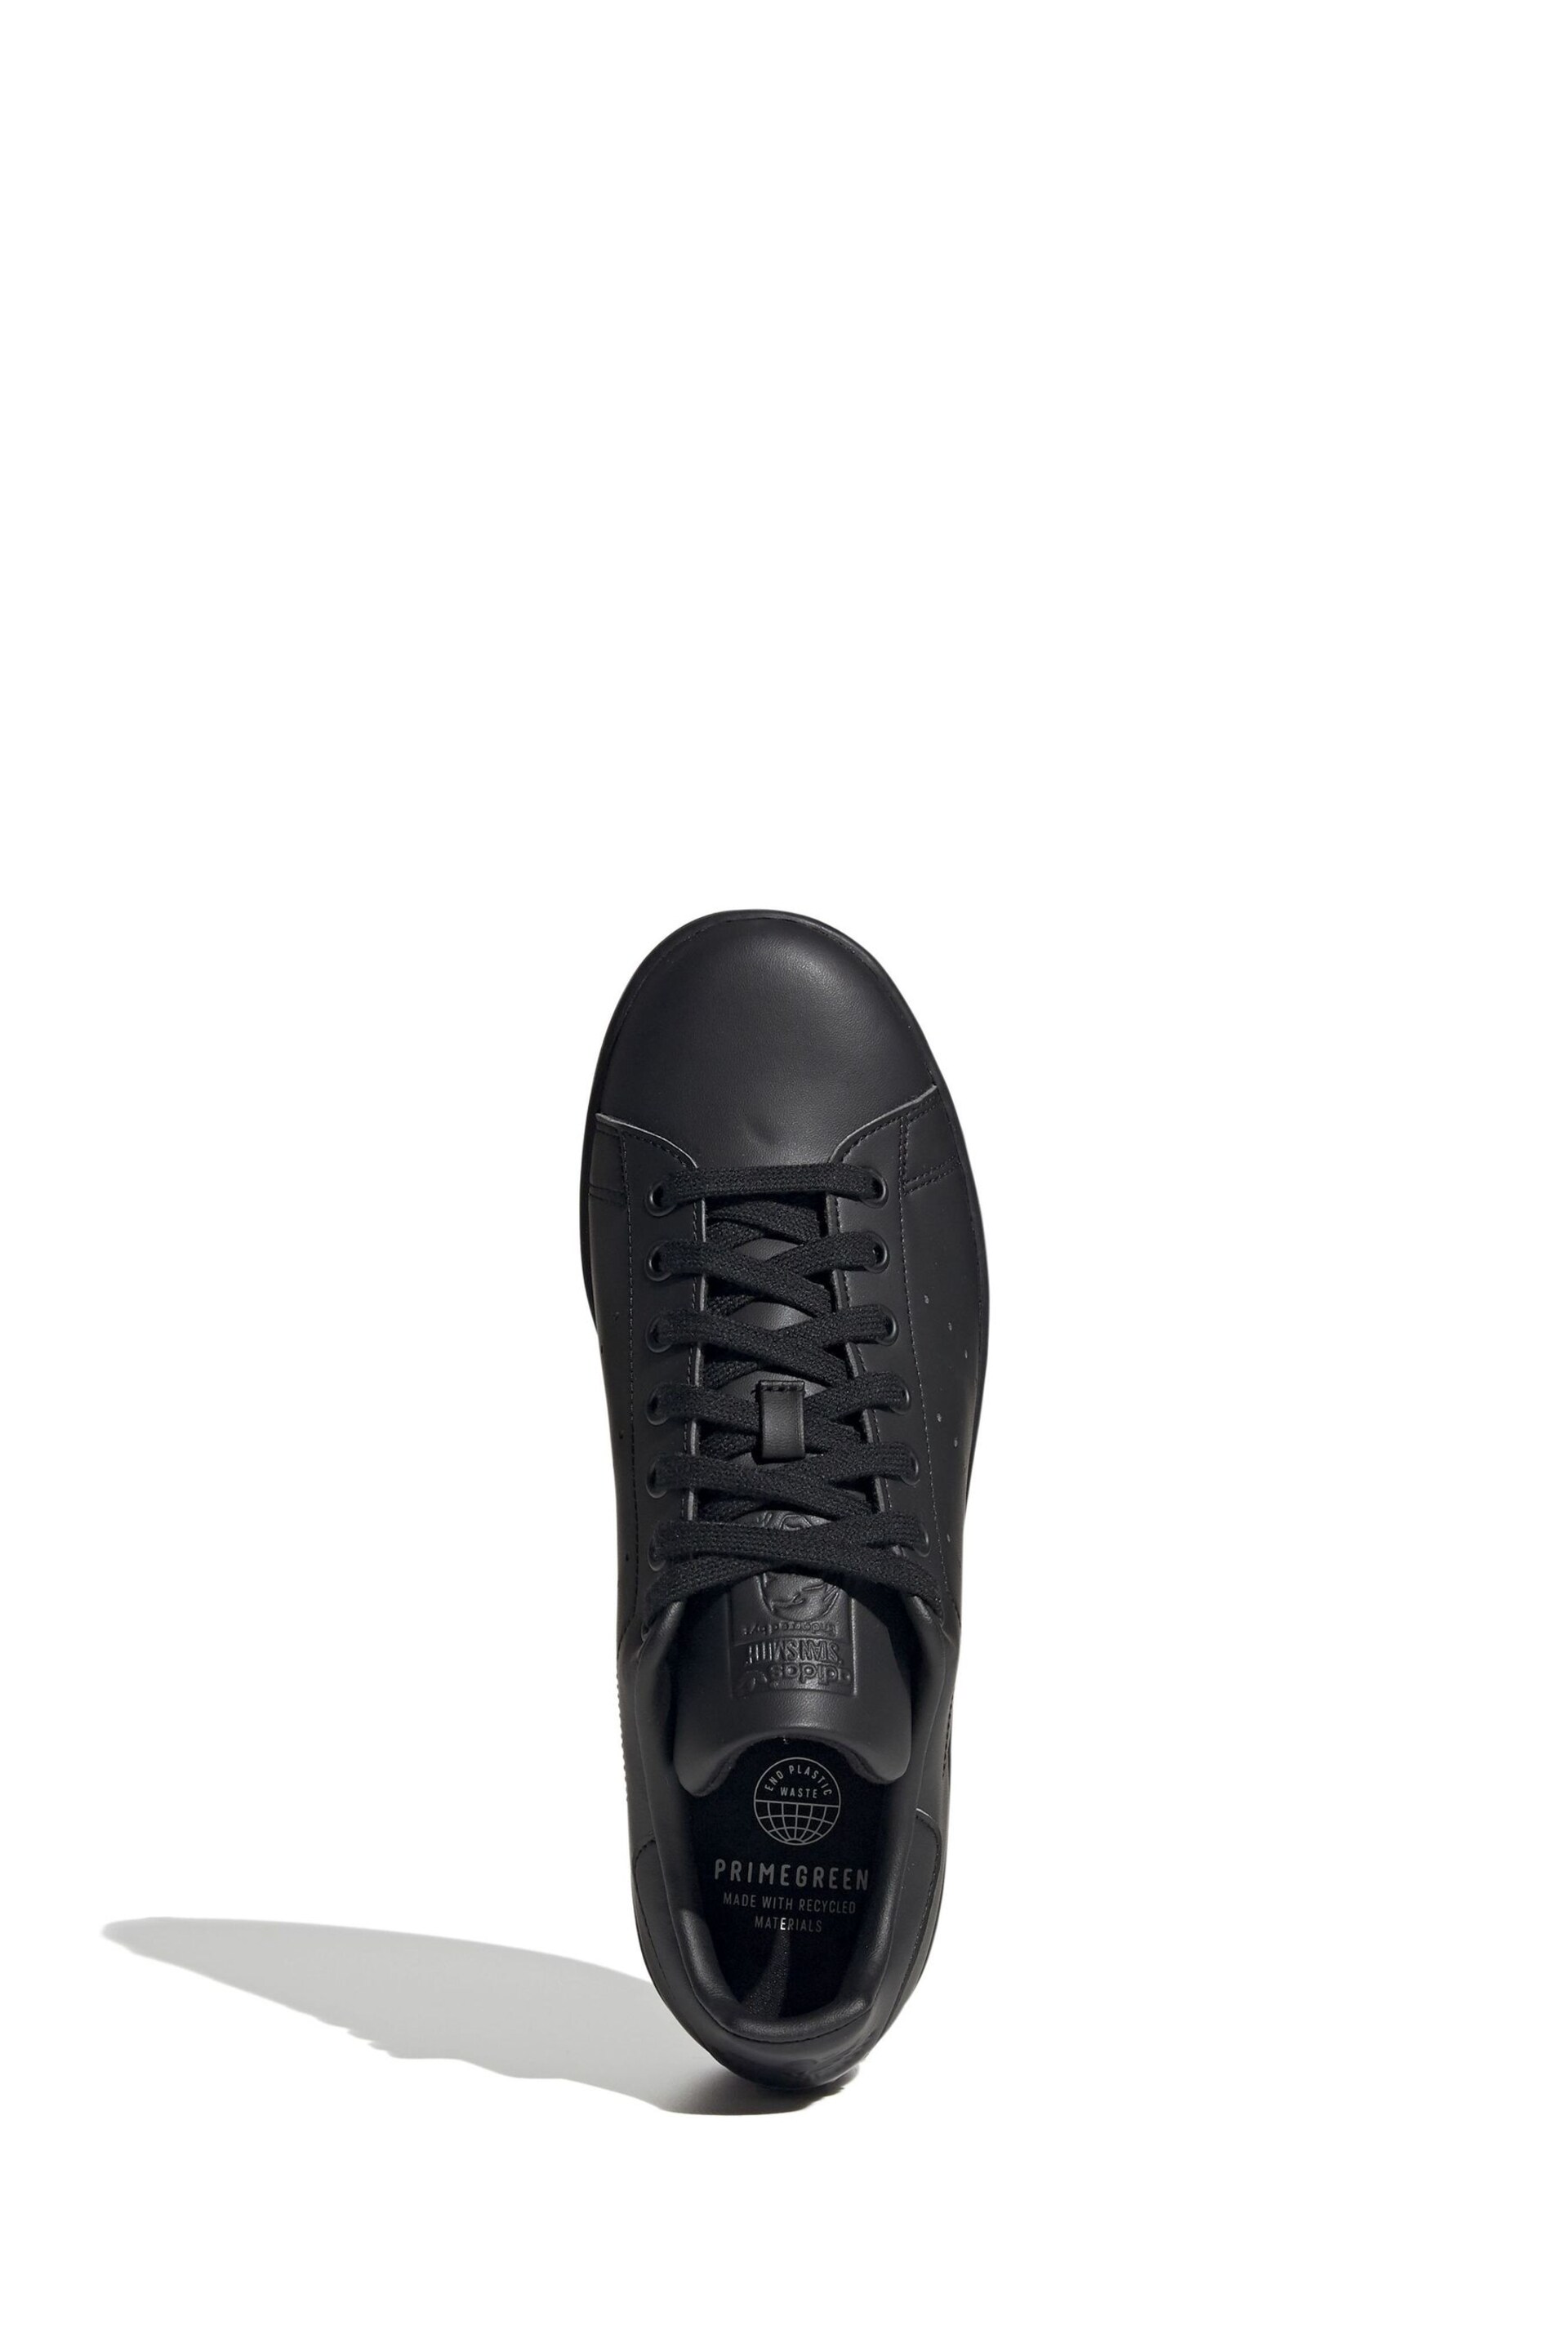 adidas Originals Stan Smith Trainers - Image 7 of 9